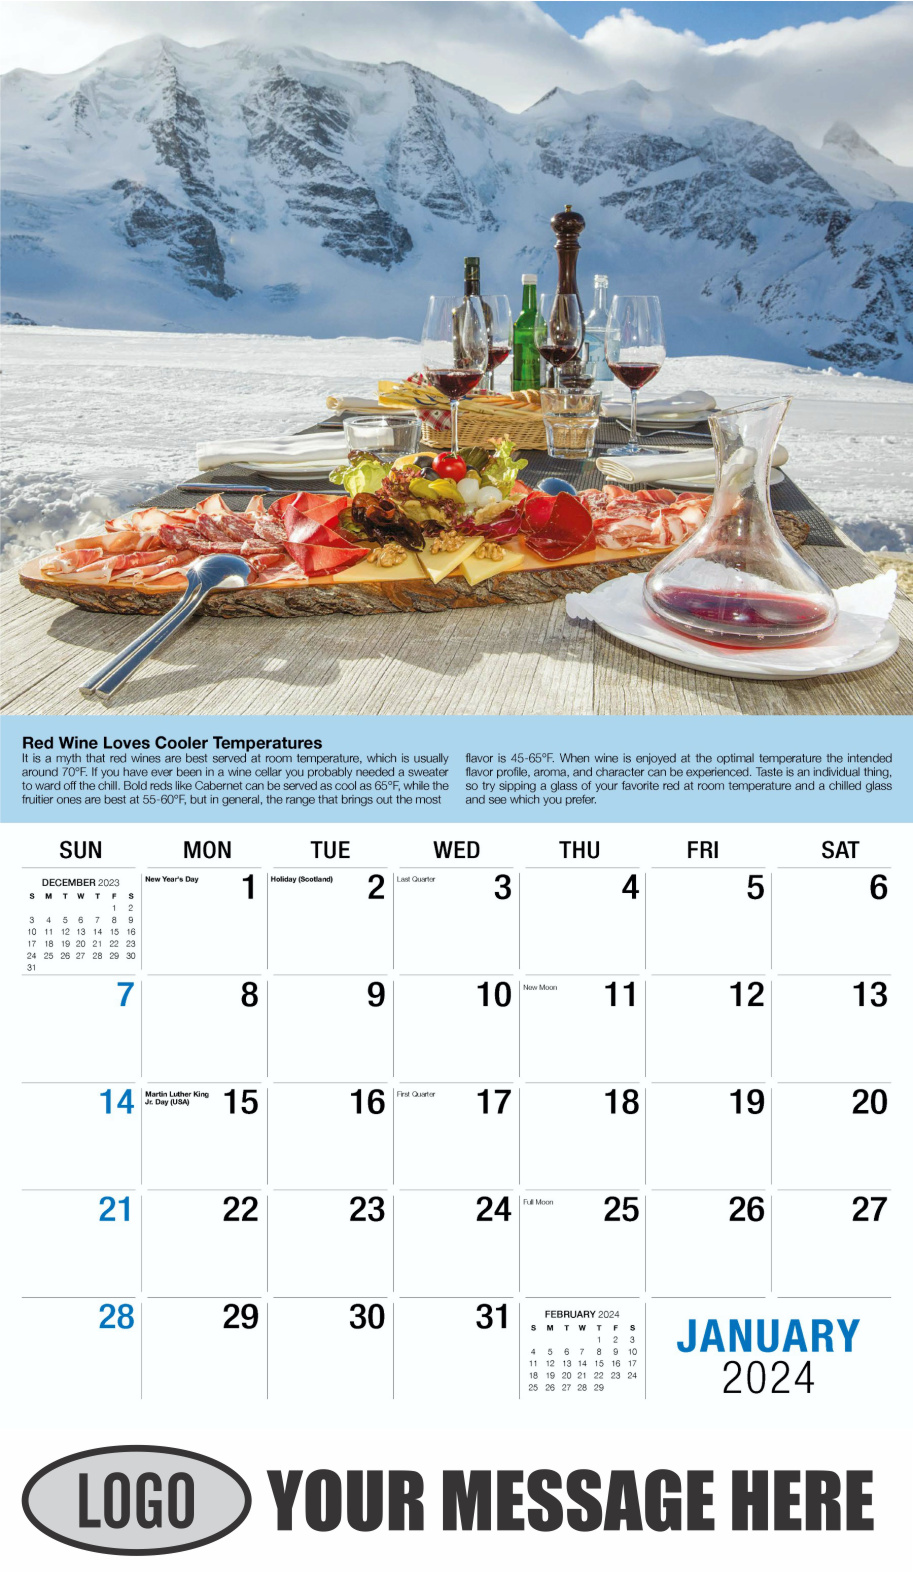 Vintages - Wine Tips 2024 Business Promo Calendar - January